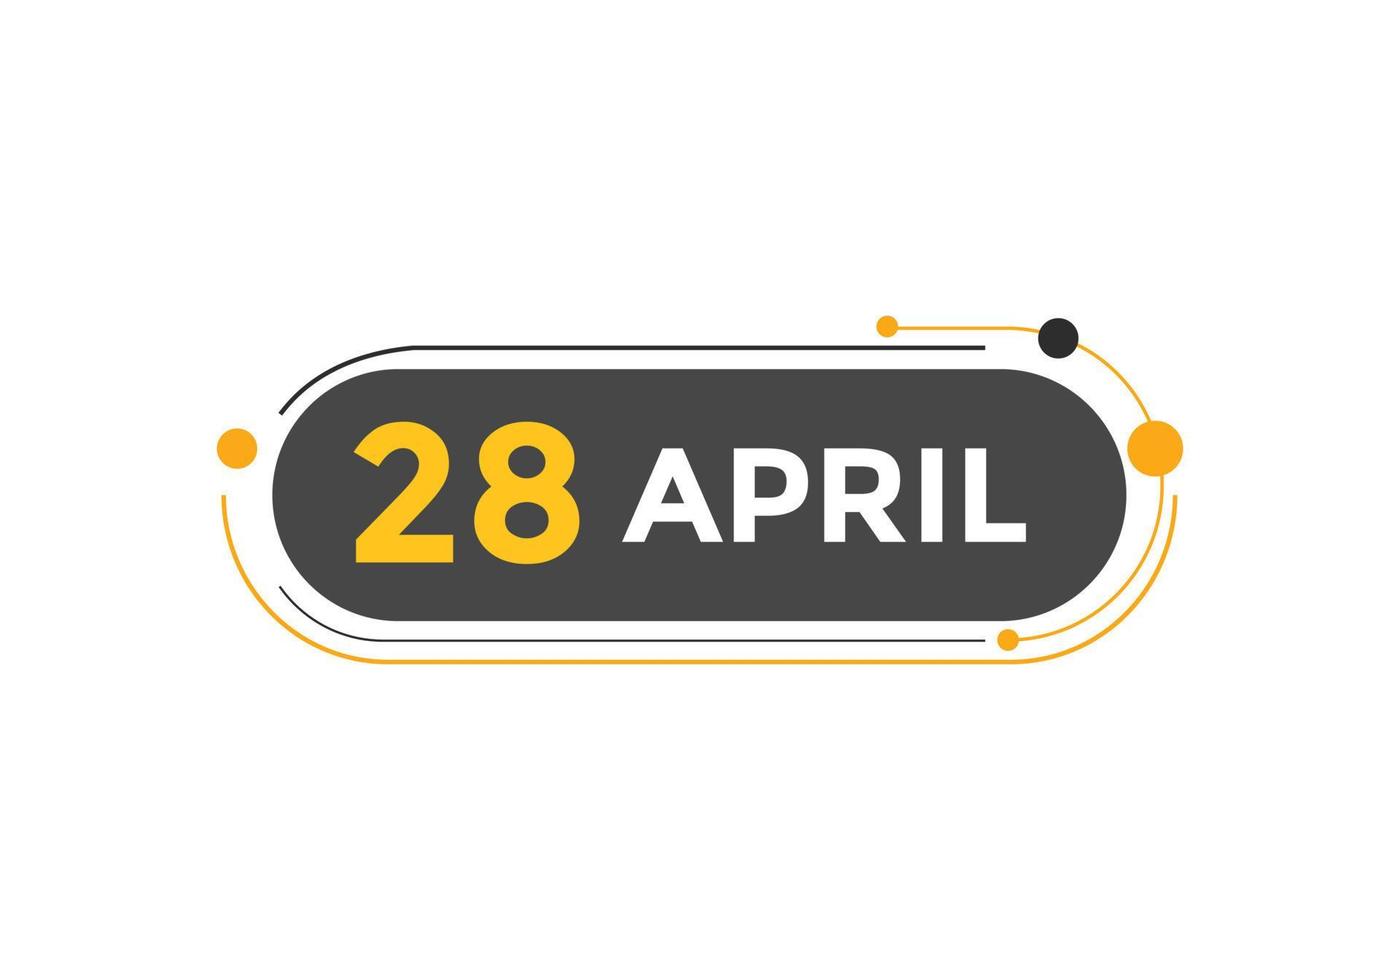 april 28 calendar reminder. 28th april daily calendar icon template. Calendar 28th april icon Design template. Vector illustration